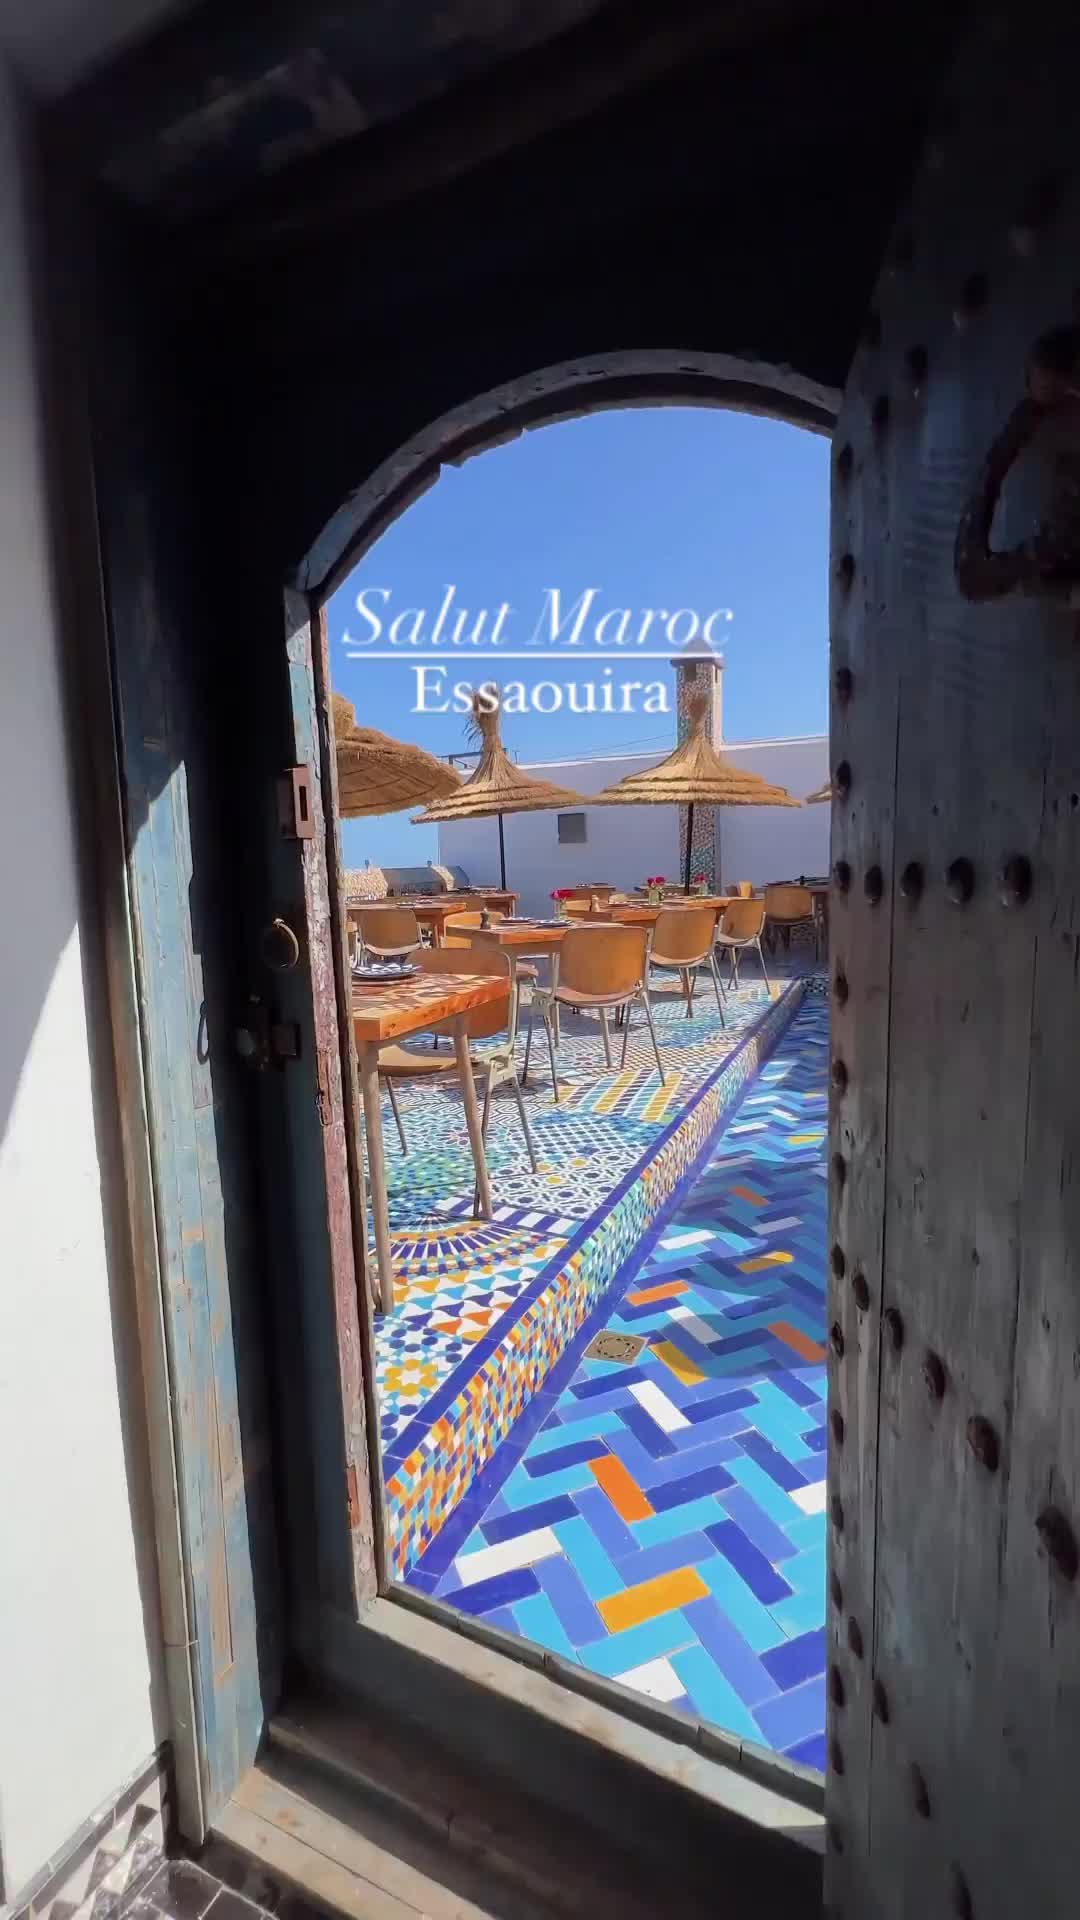 Welcome to Salut Maroc in Essaouira, Morocco